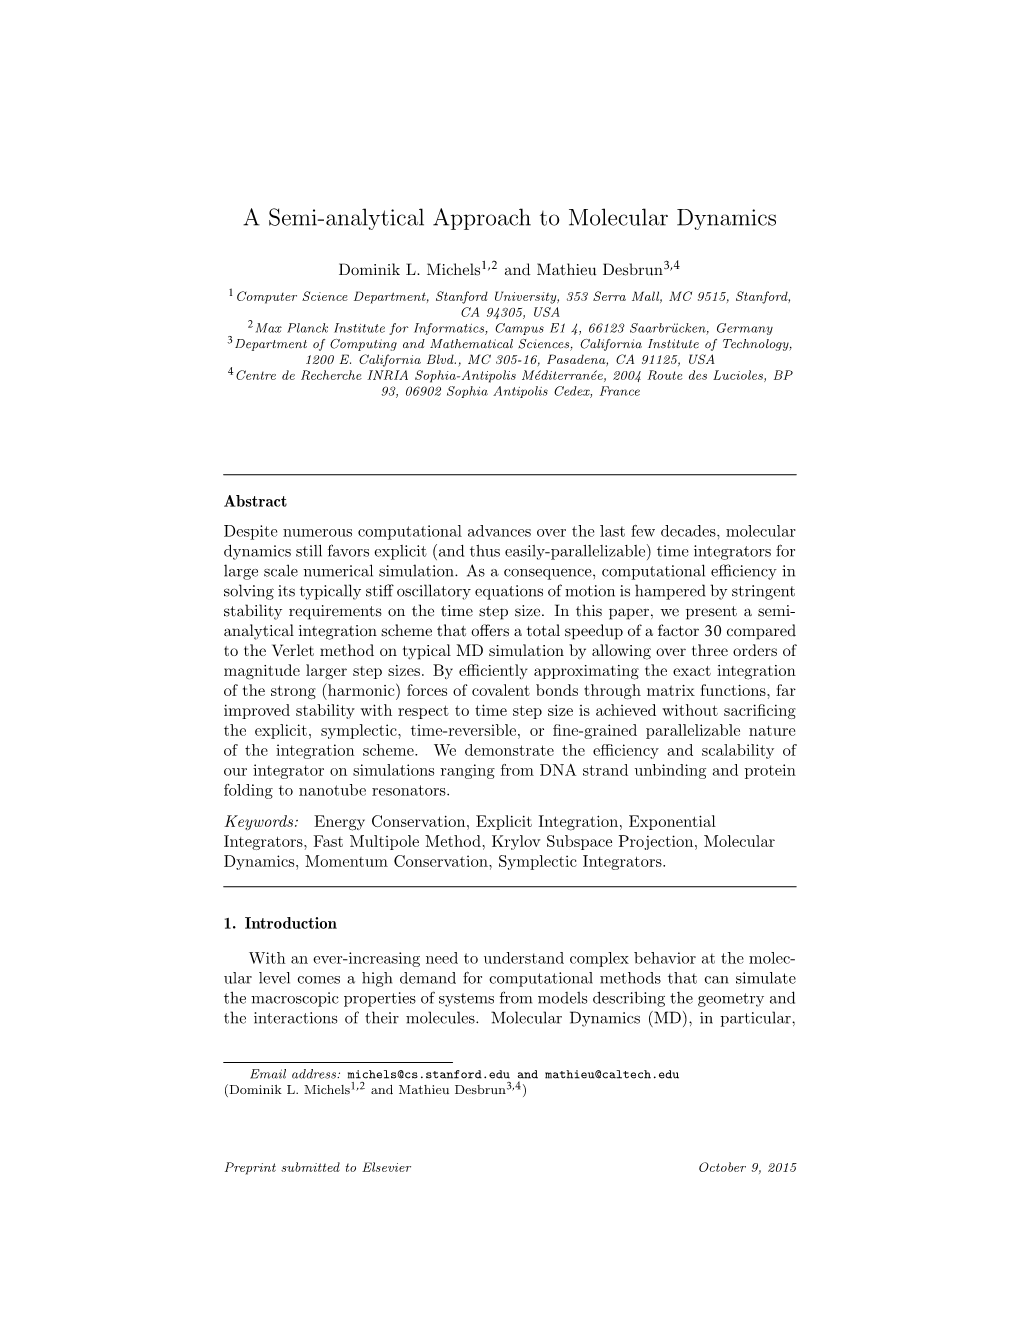 A Semi-Analytical Approach to Molecular Dynamics